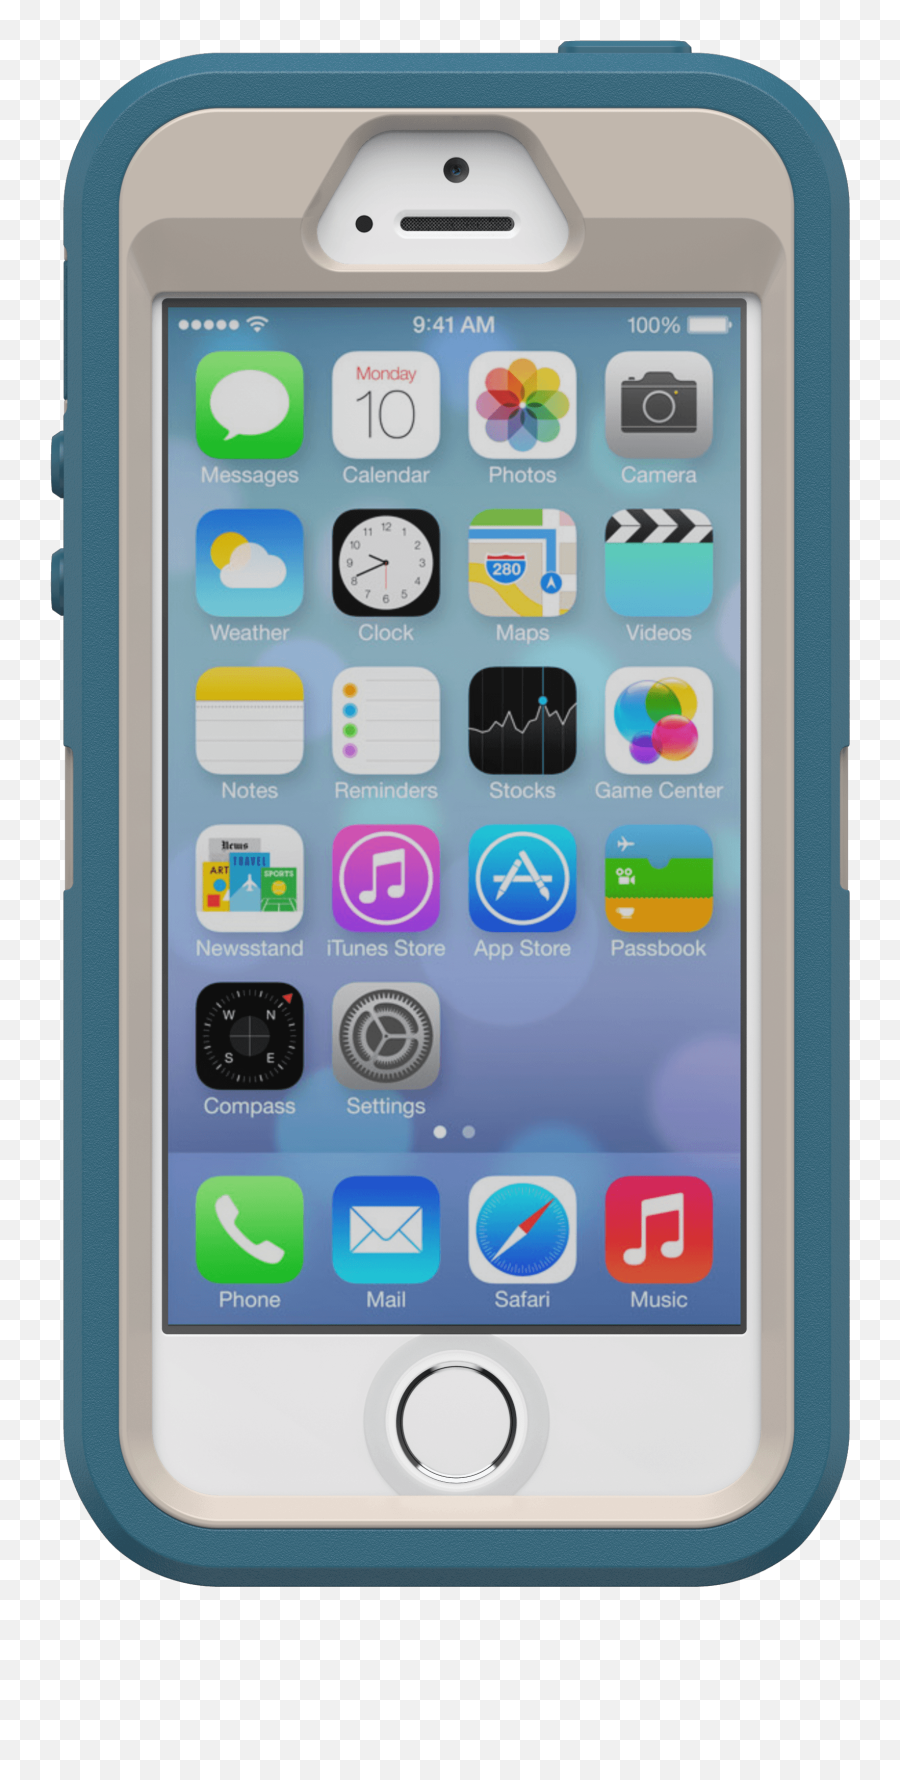 Otterbox Defender Series Pro Phone Case For Apple Iphone 5 Emoji,Transparent Iphone 5s Cases